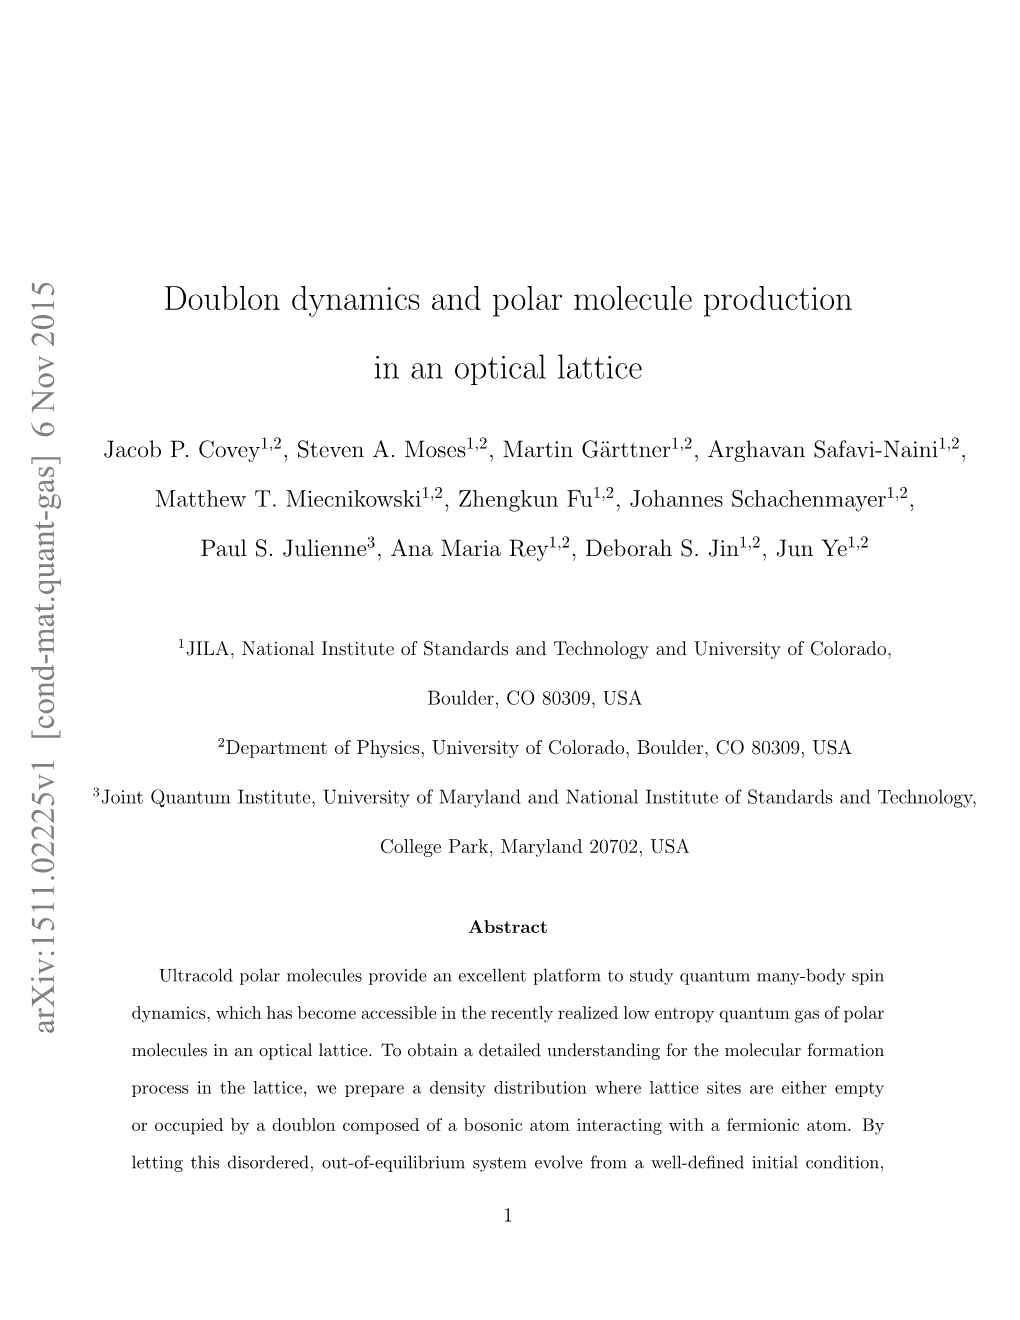 Doublon Dynamics and Polar Molecule Production in an Optical Lattice